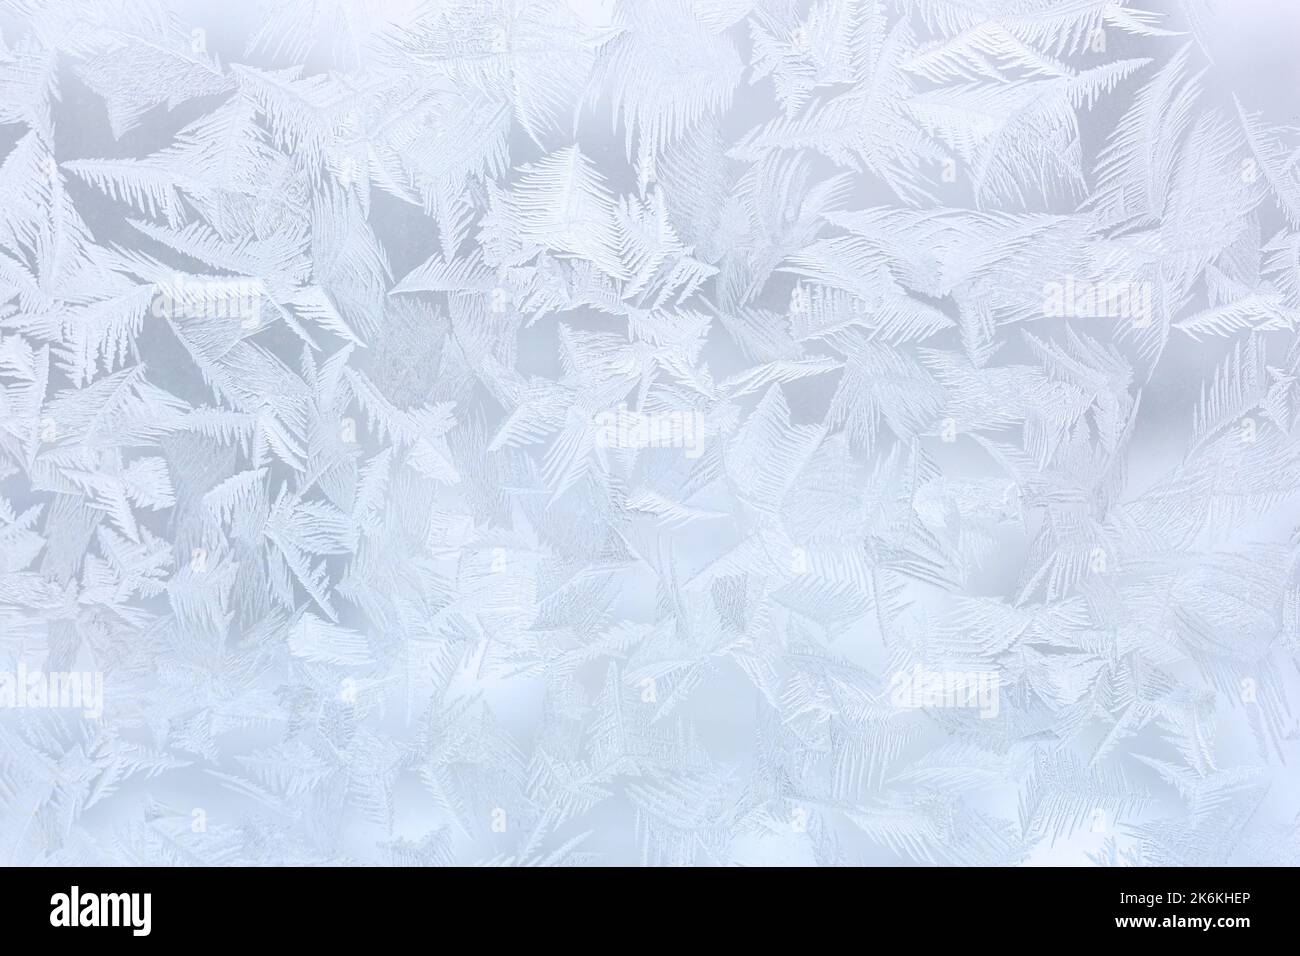 frosty patterns on glass, silver Christmas background Stock Photo